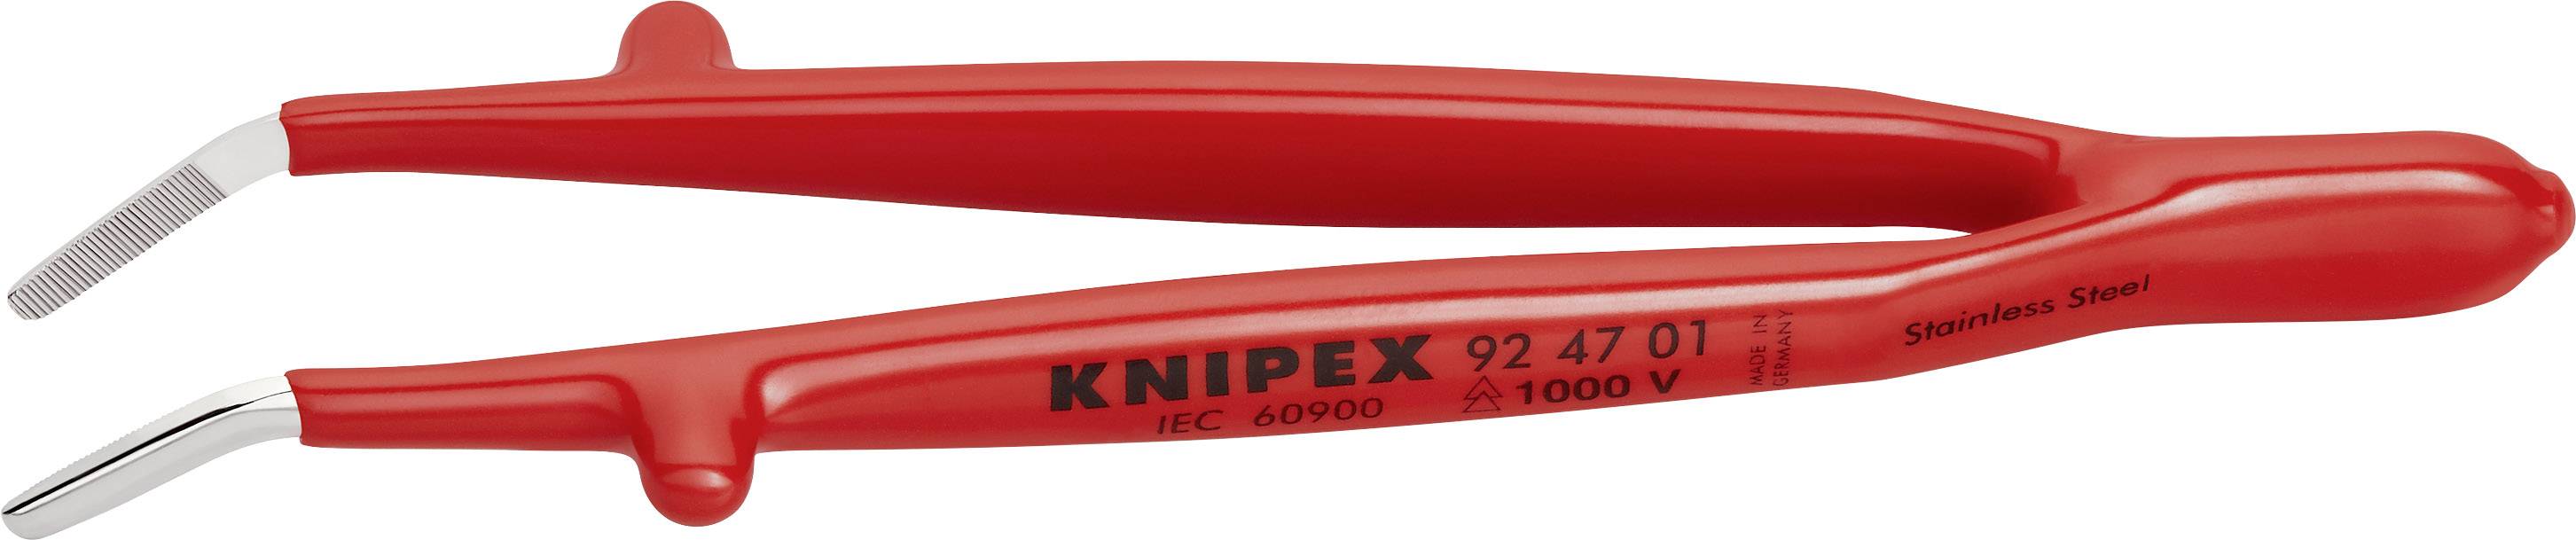 KNIPEX 92 47 01 Universalpinzette 1 Stück Stumpf 142 mm